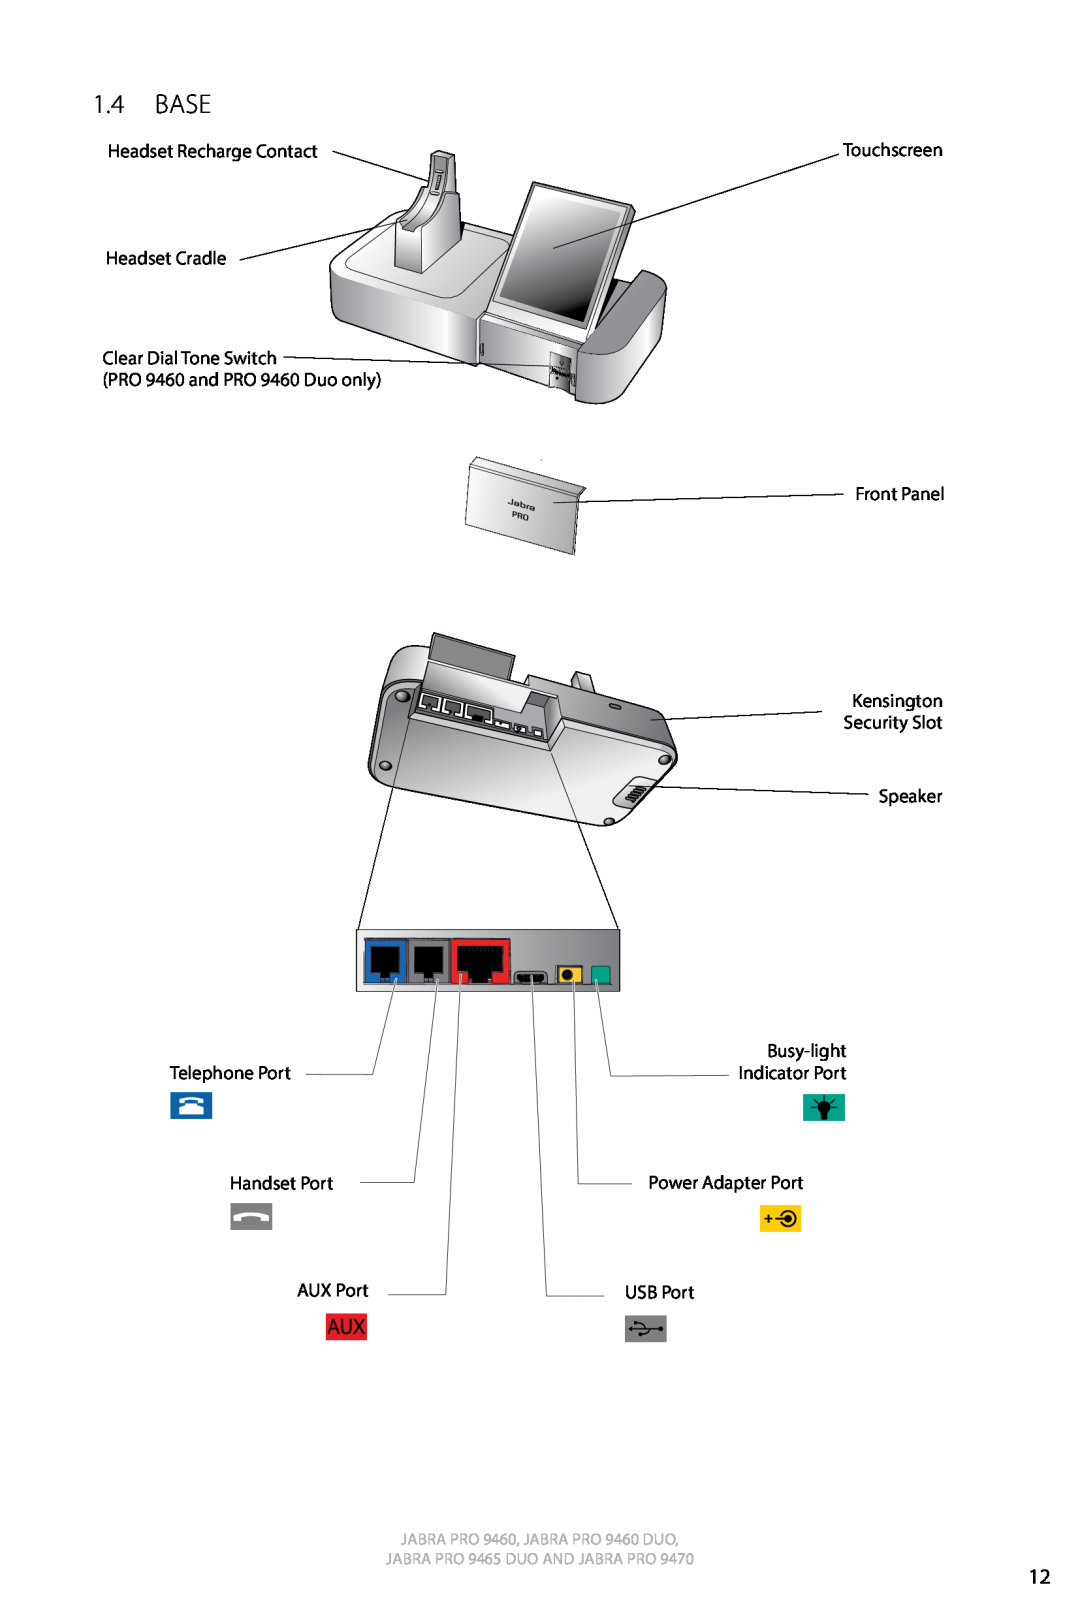 Jabra 9460 user manual Base, Headset Recharge Contact Headset Cradle, Telephone Port Handset Port AUX Port 